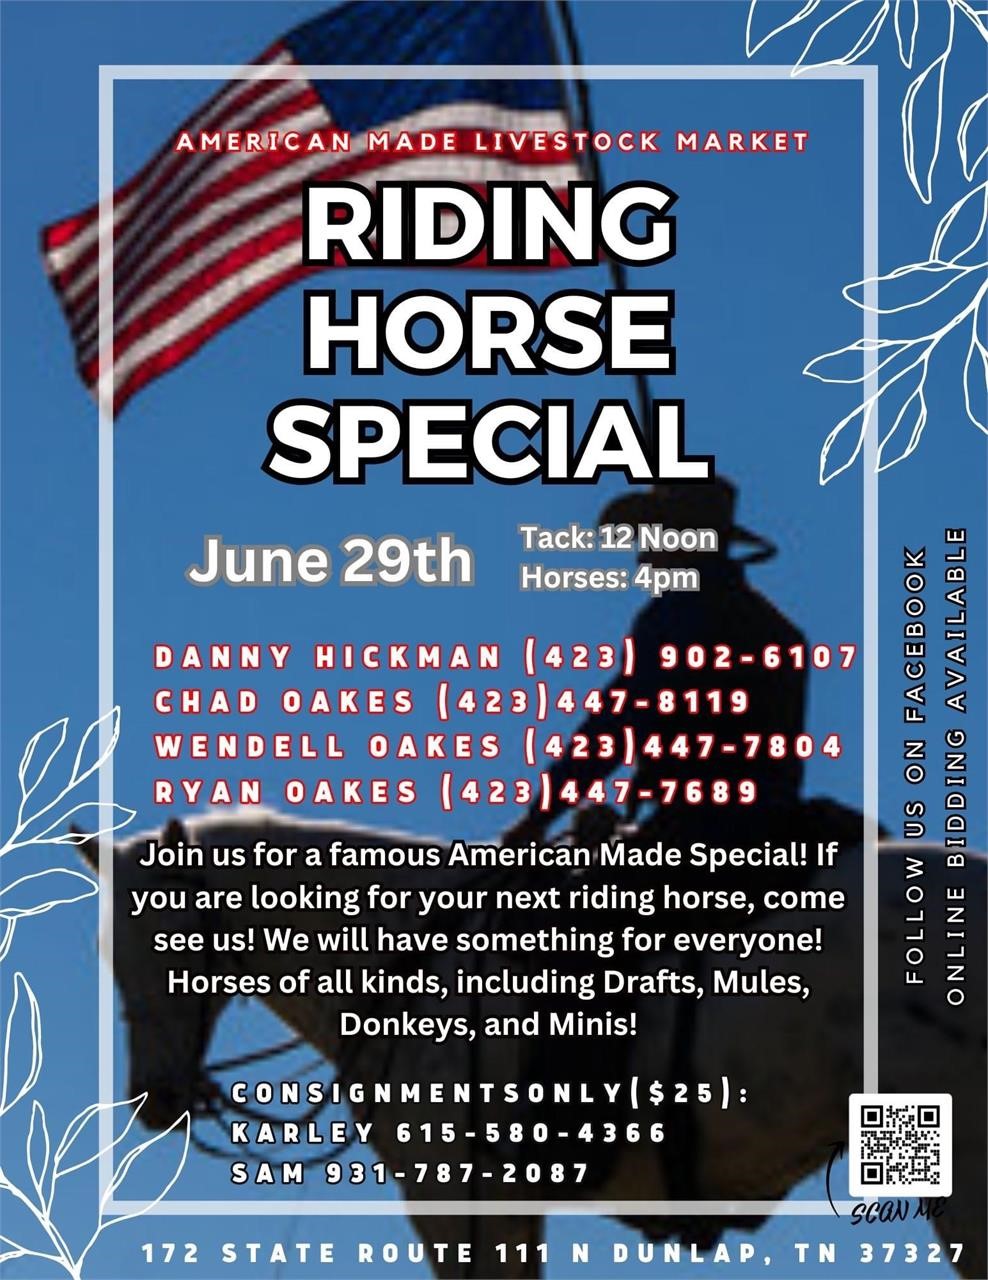 American Made Livestock Market RIDING HORSE SPECIAL